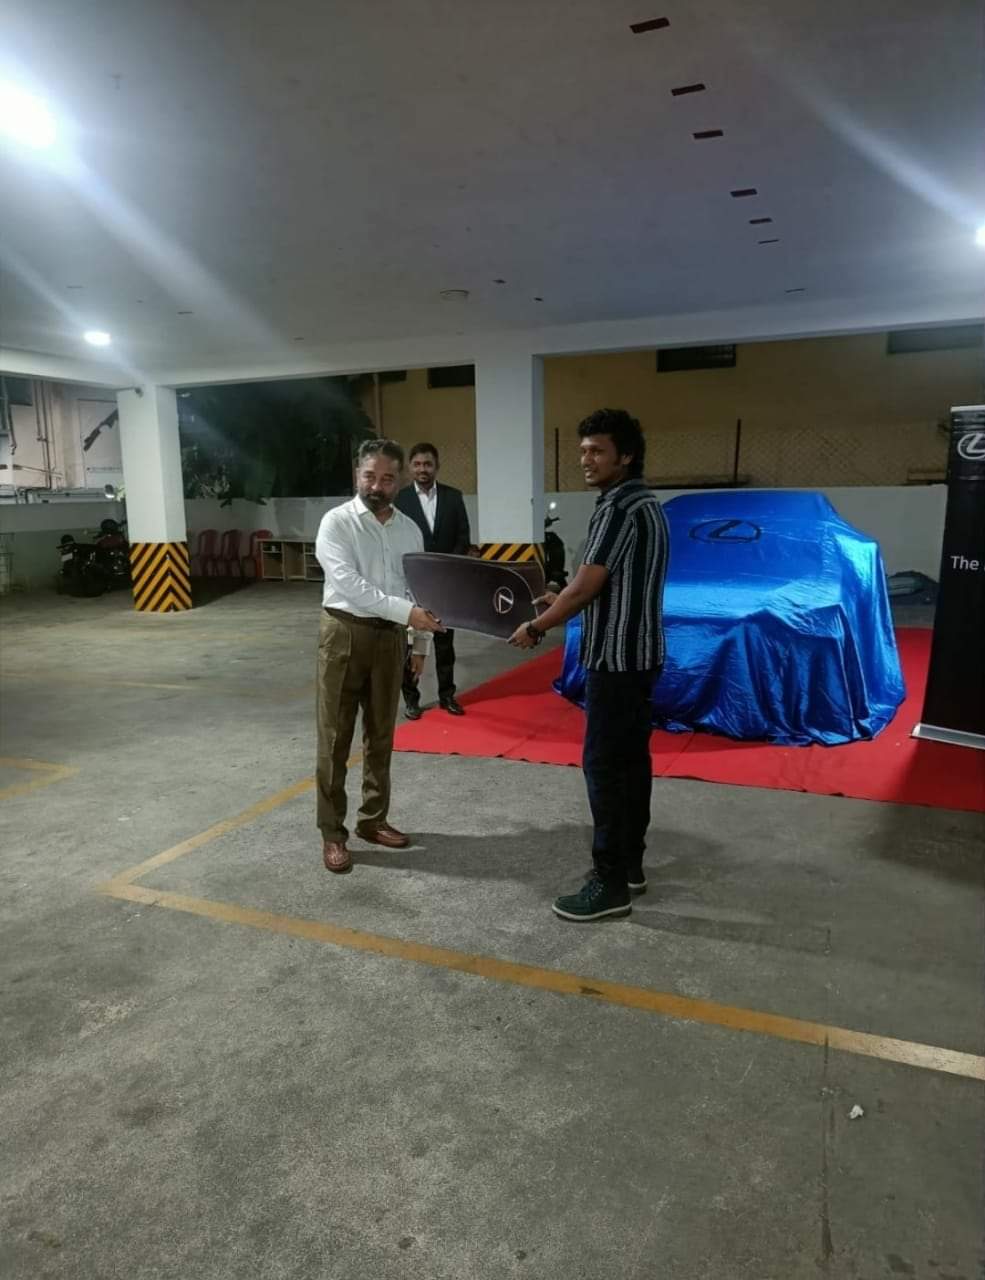 Kamal haasan gifted lexus sedan car to lokesh Kanagaraj